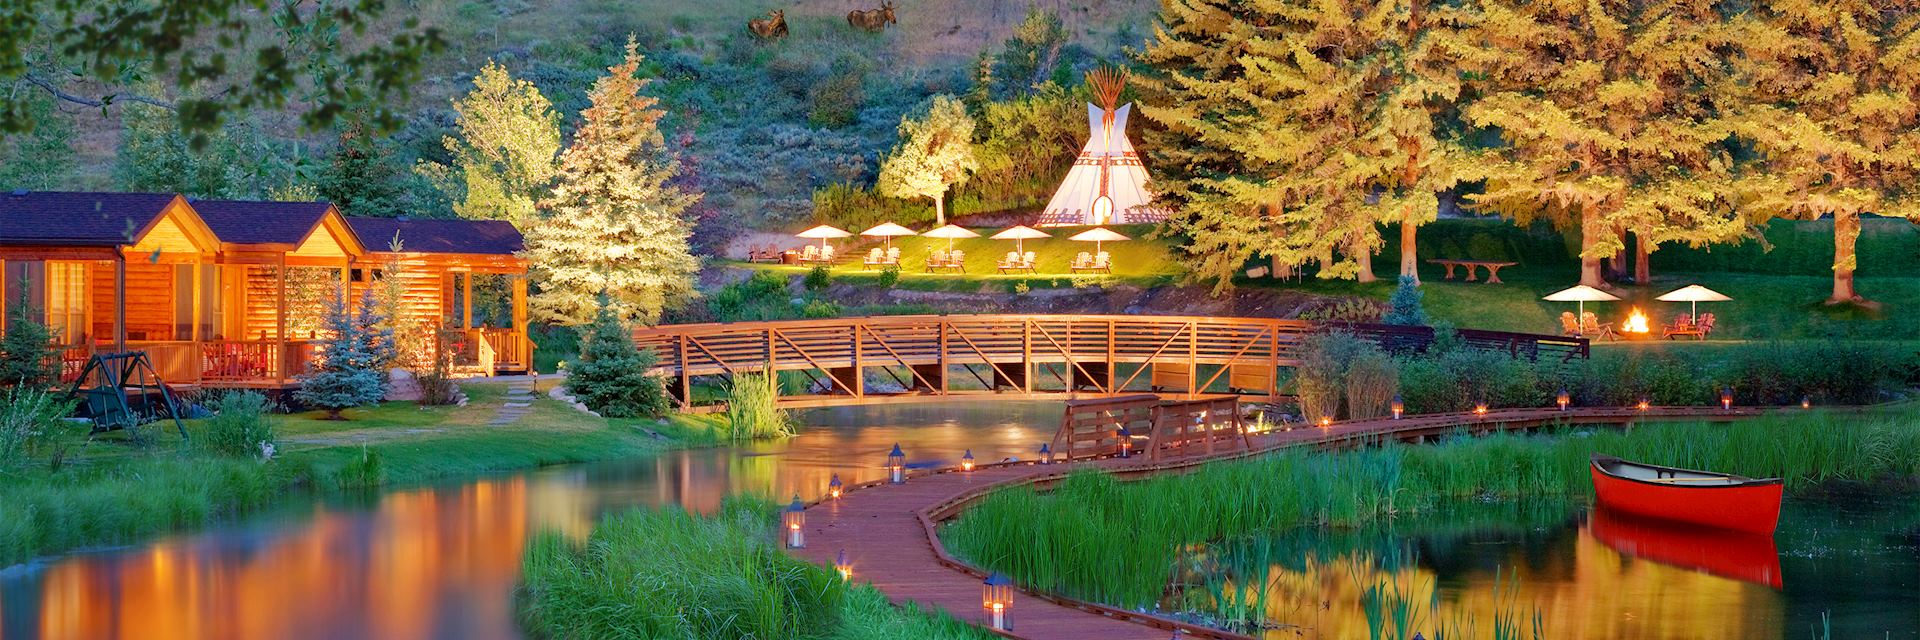 Rustic Inn Creekside Resort & Spa